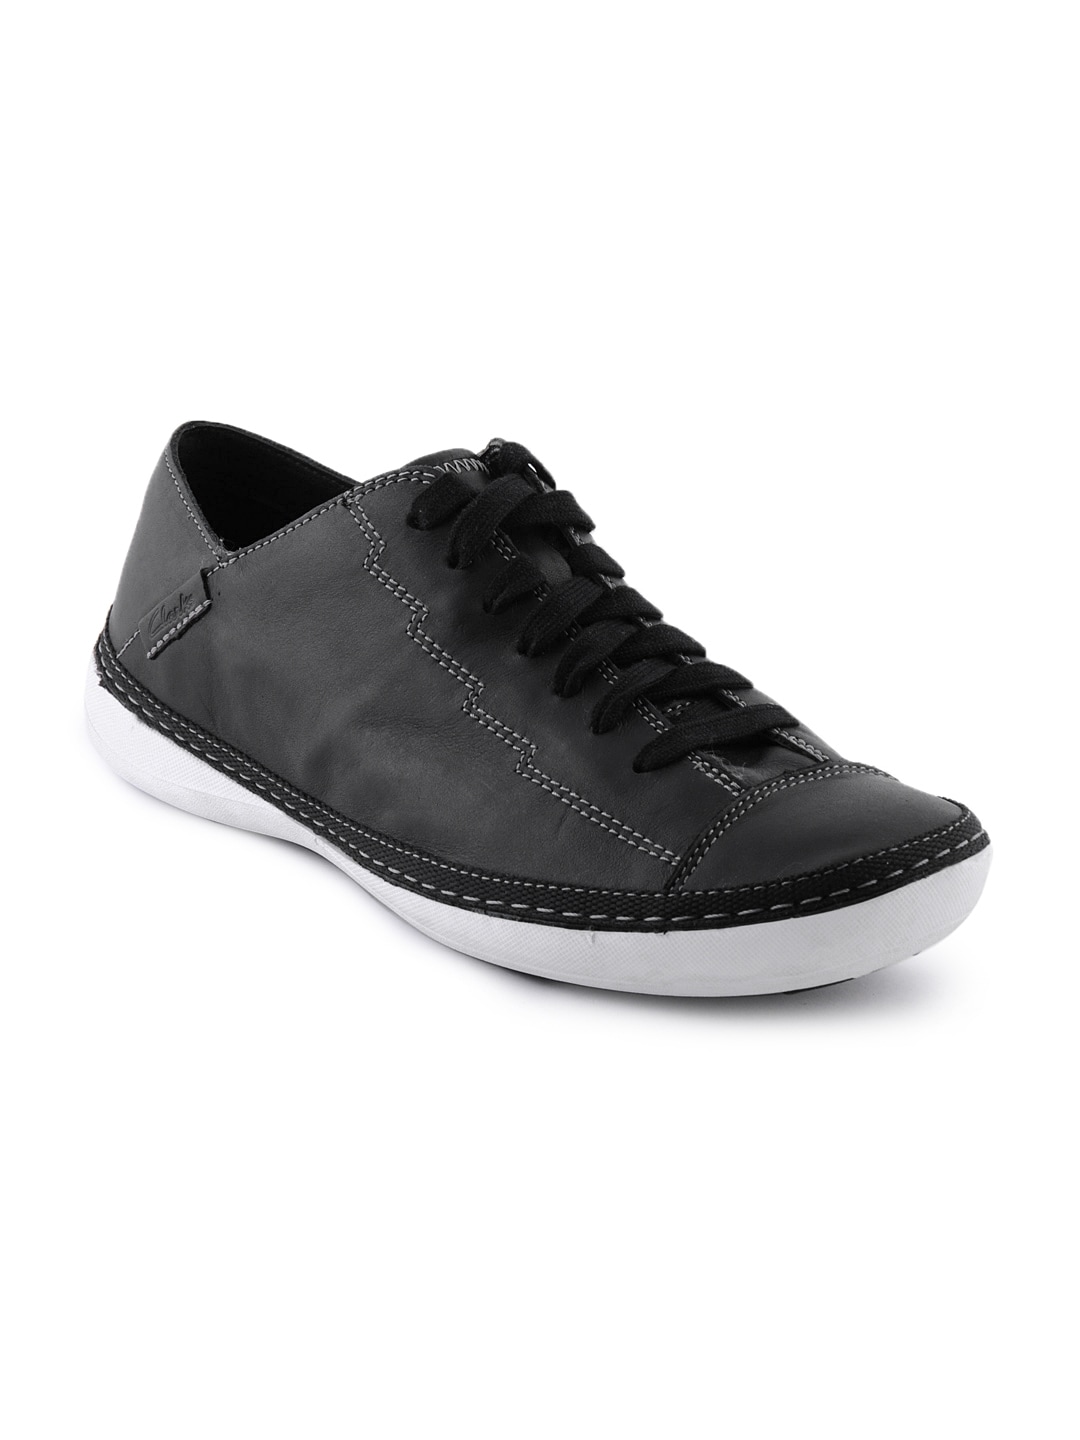 Clarks Men Rocco Fuse Black Leather Black Casual Shoes